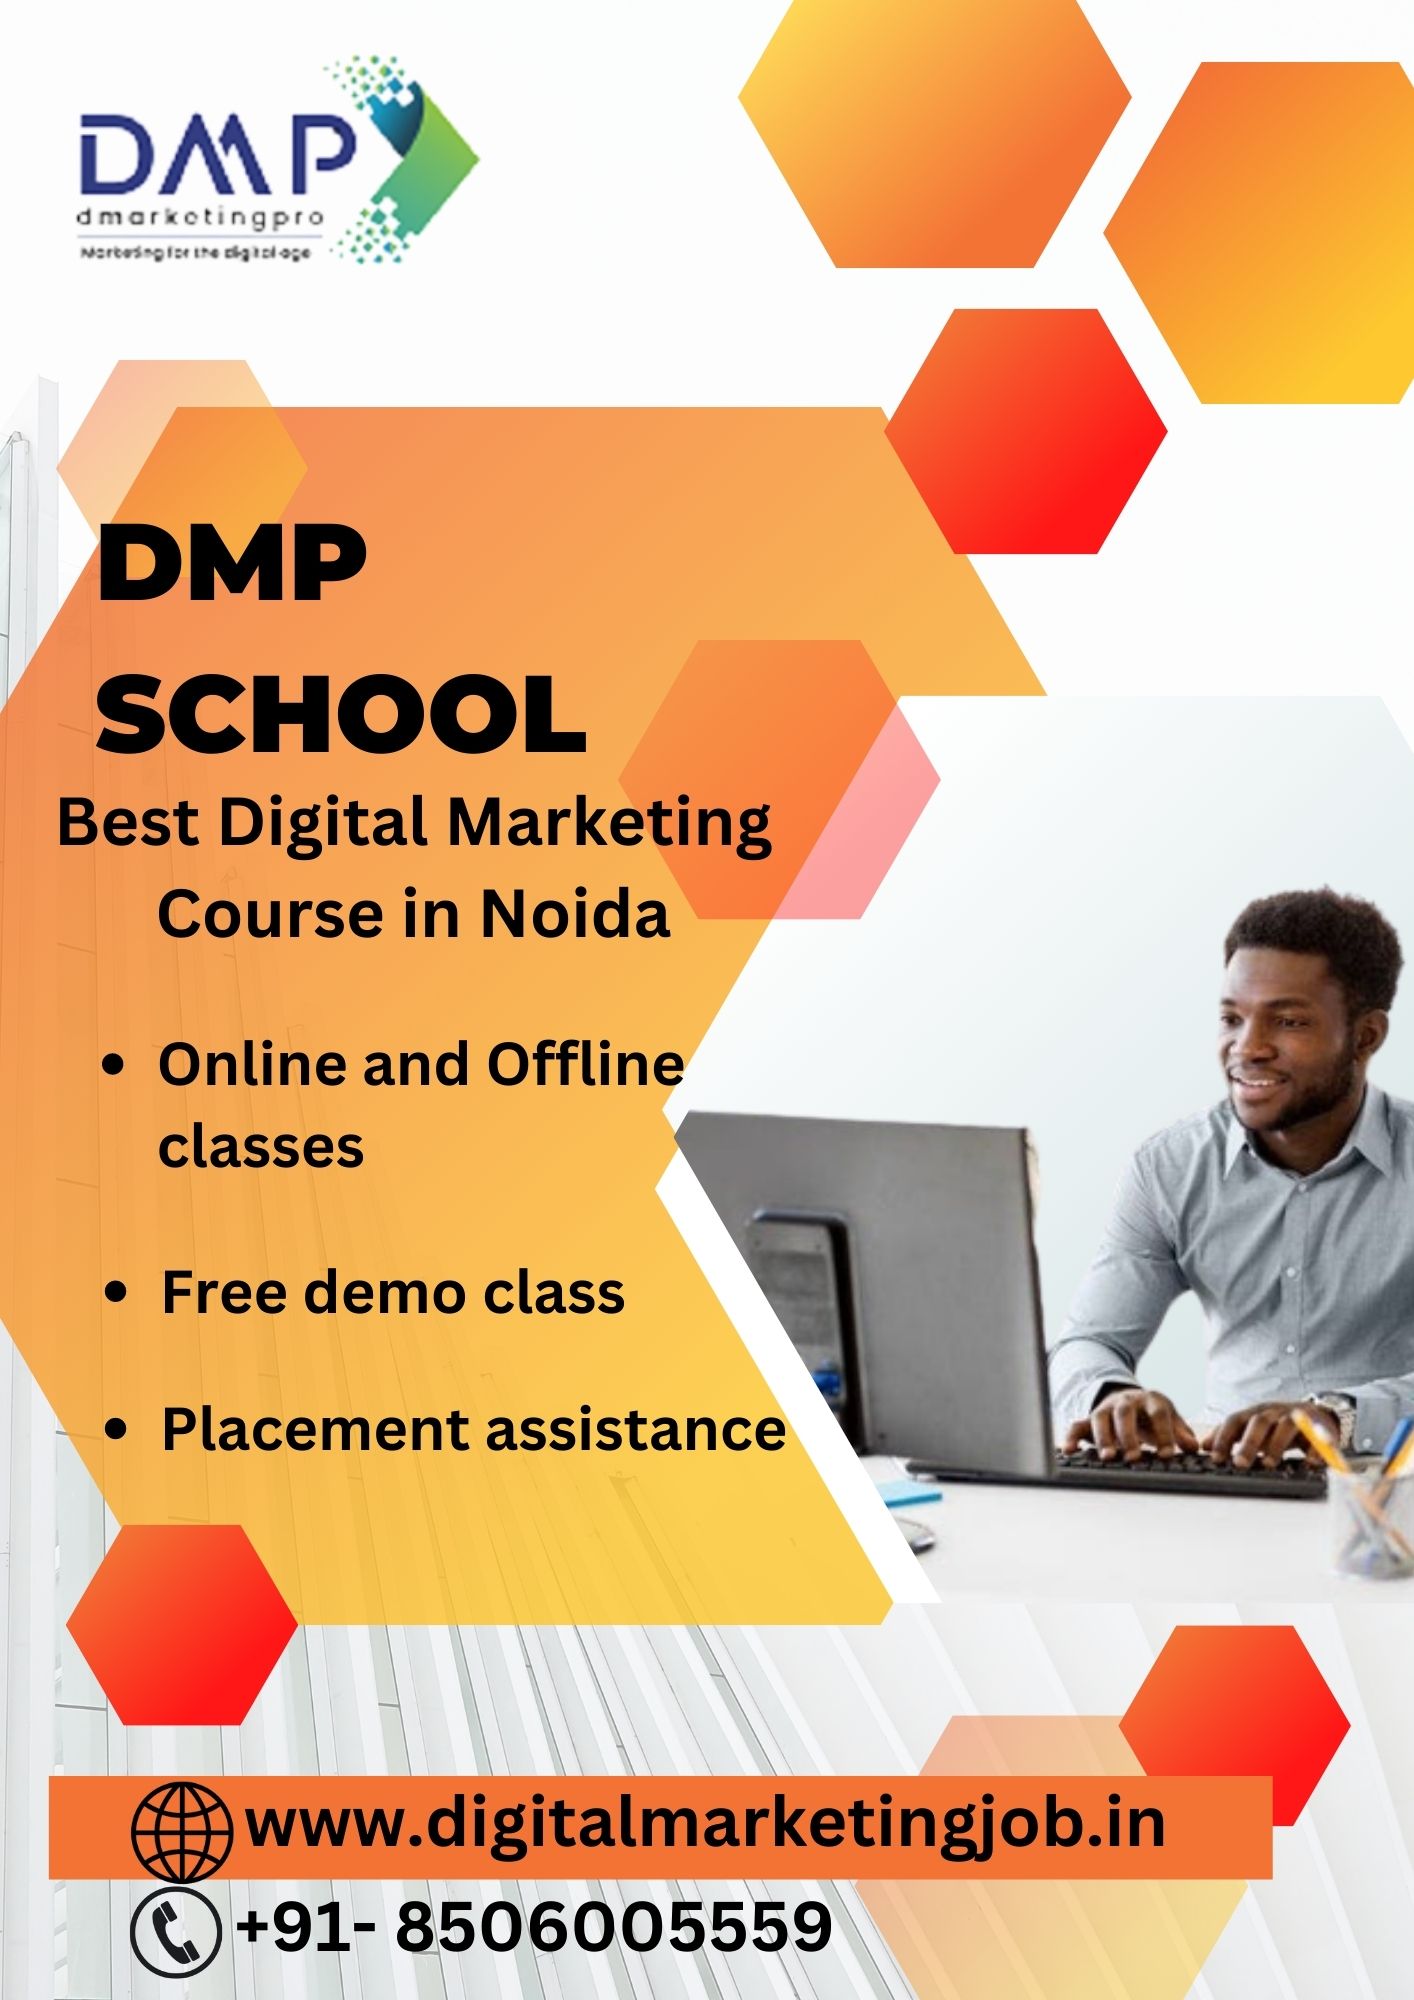 Best Digital Marketing Course in Noida